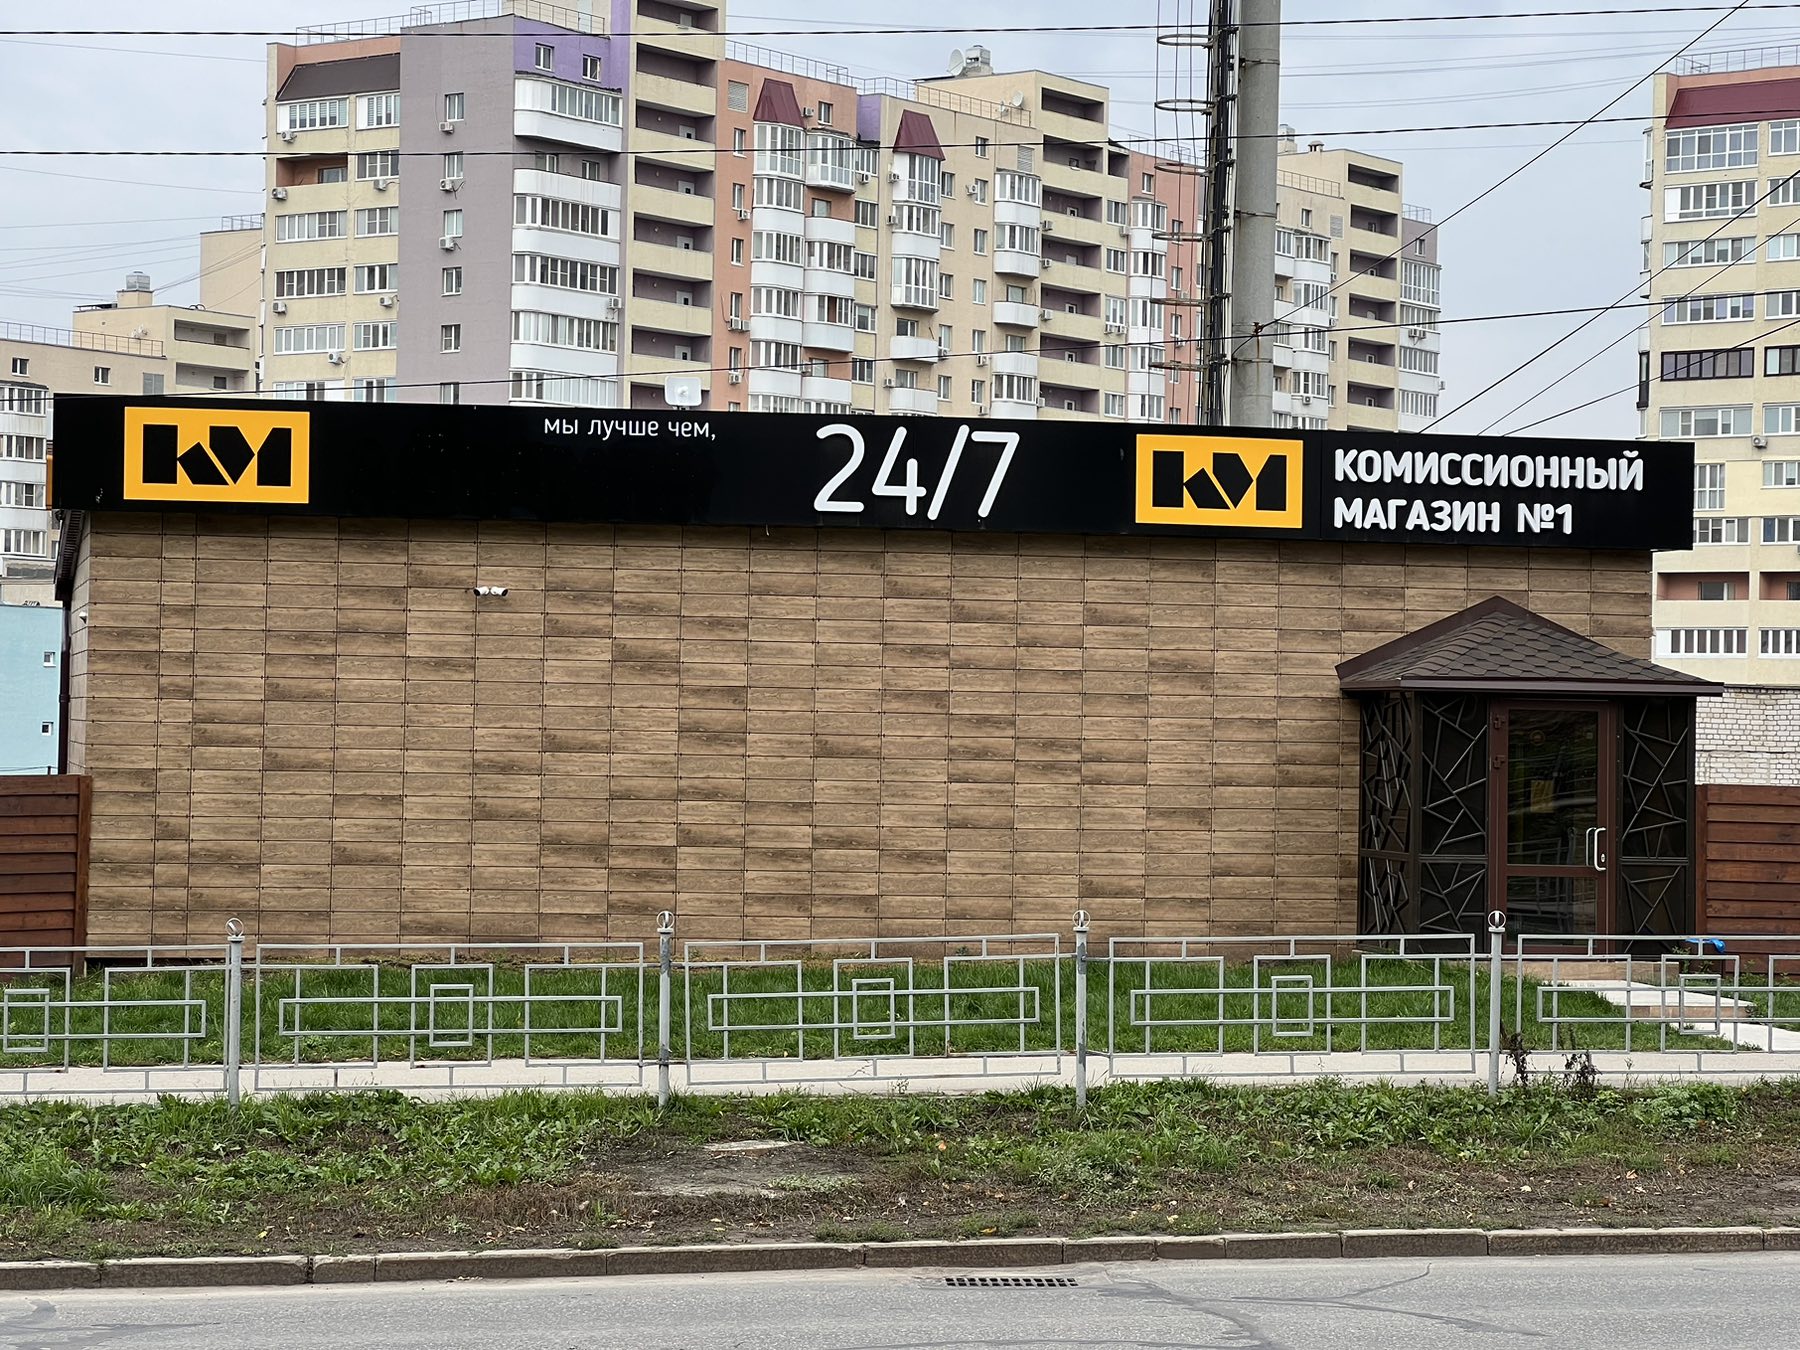 Цены «Комиссионный магазин № 1» в Самаре — Яндекс Карты